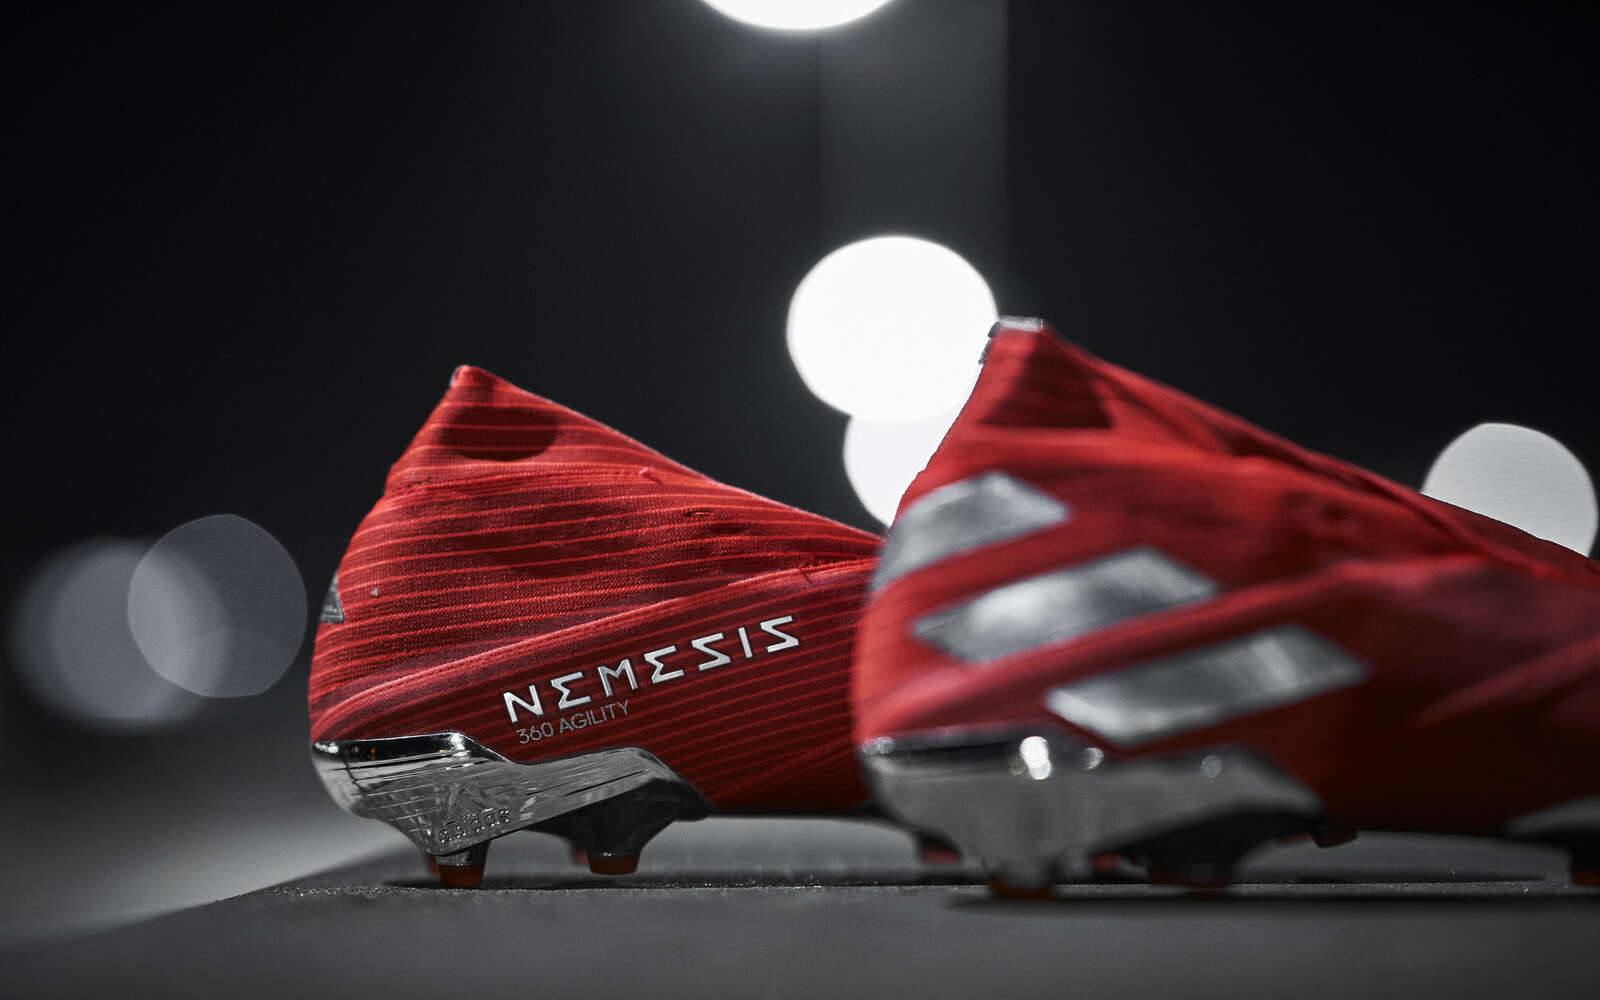 latest adidas football shoes